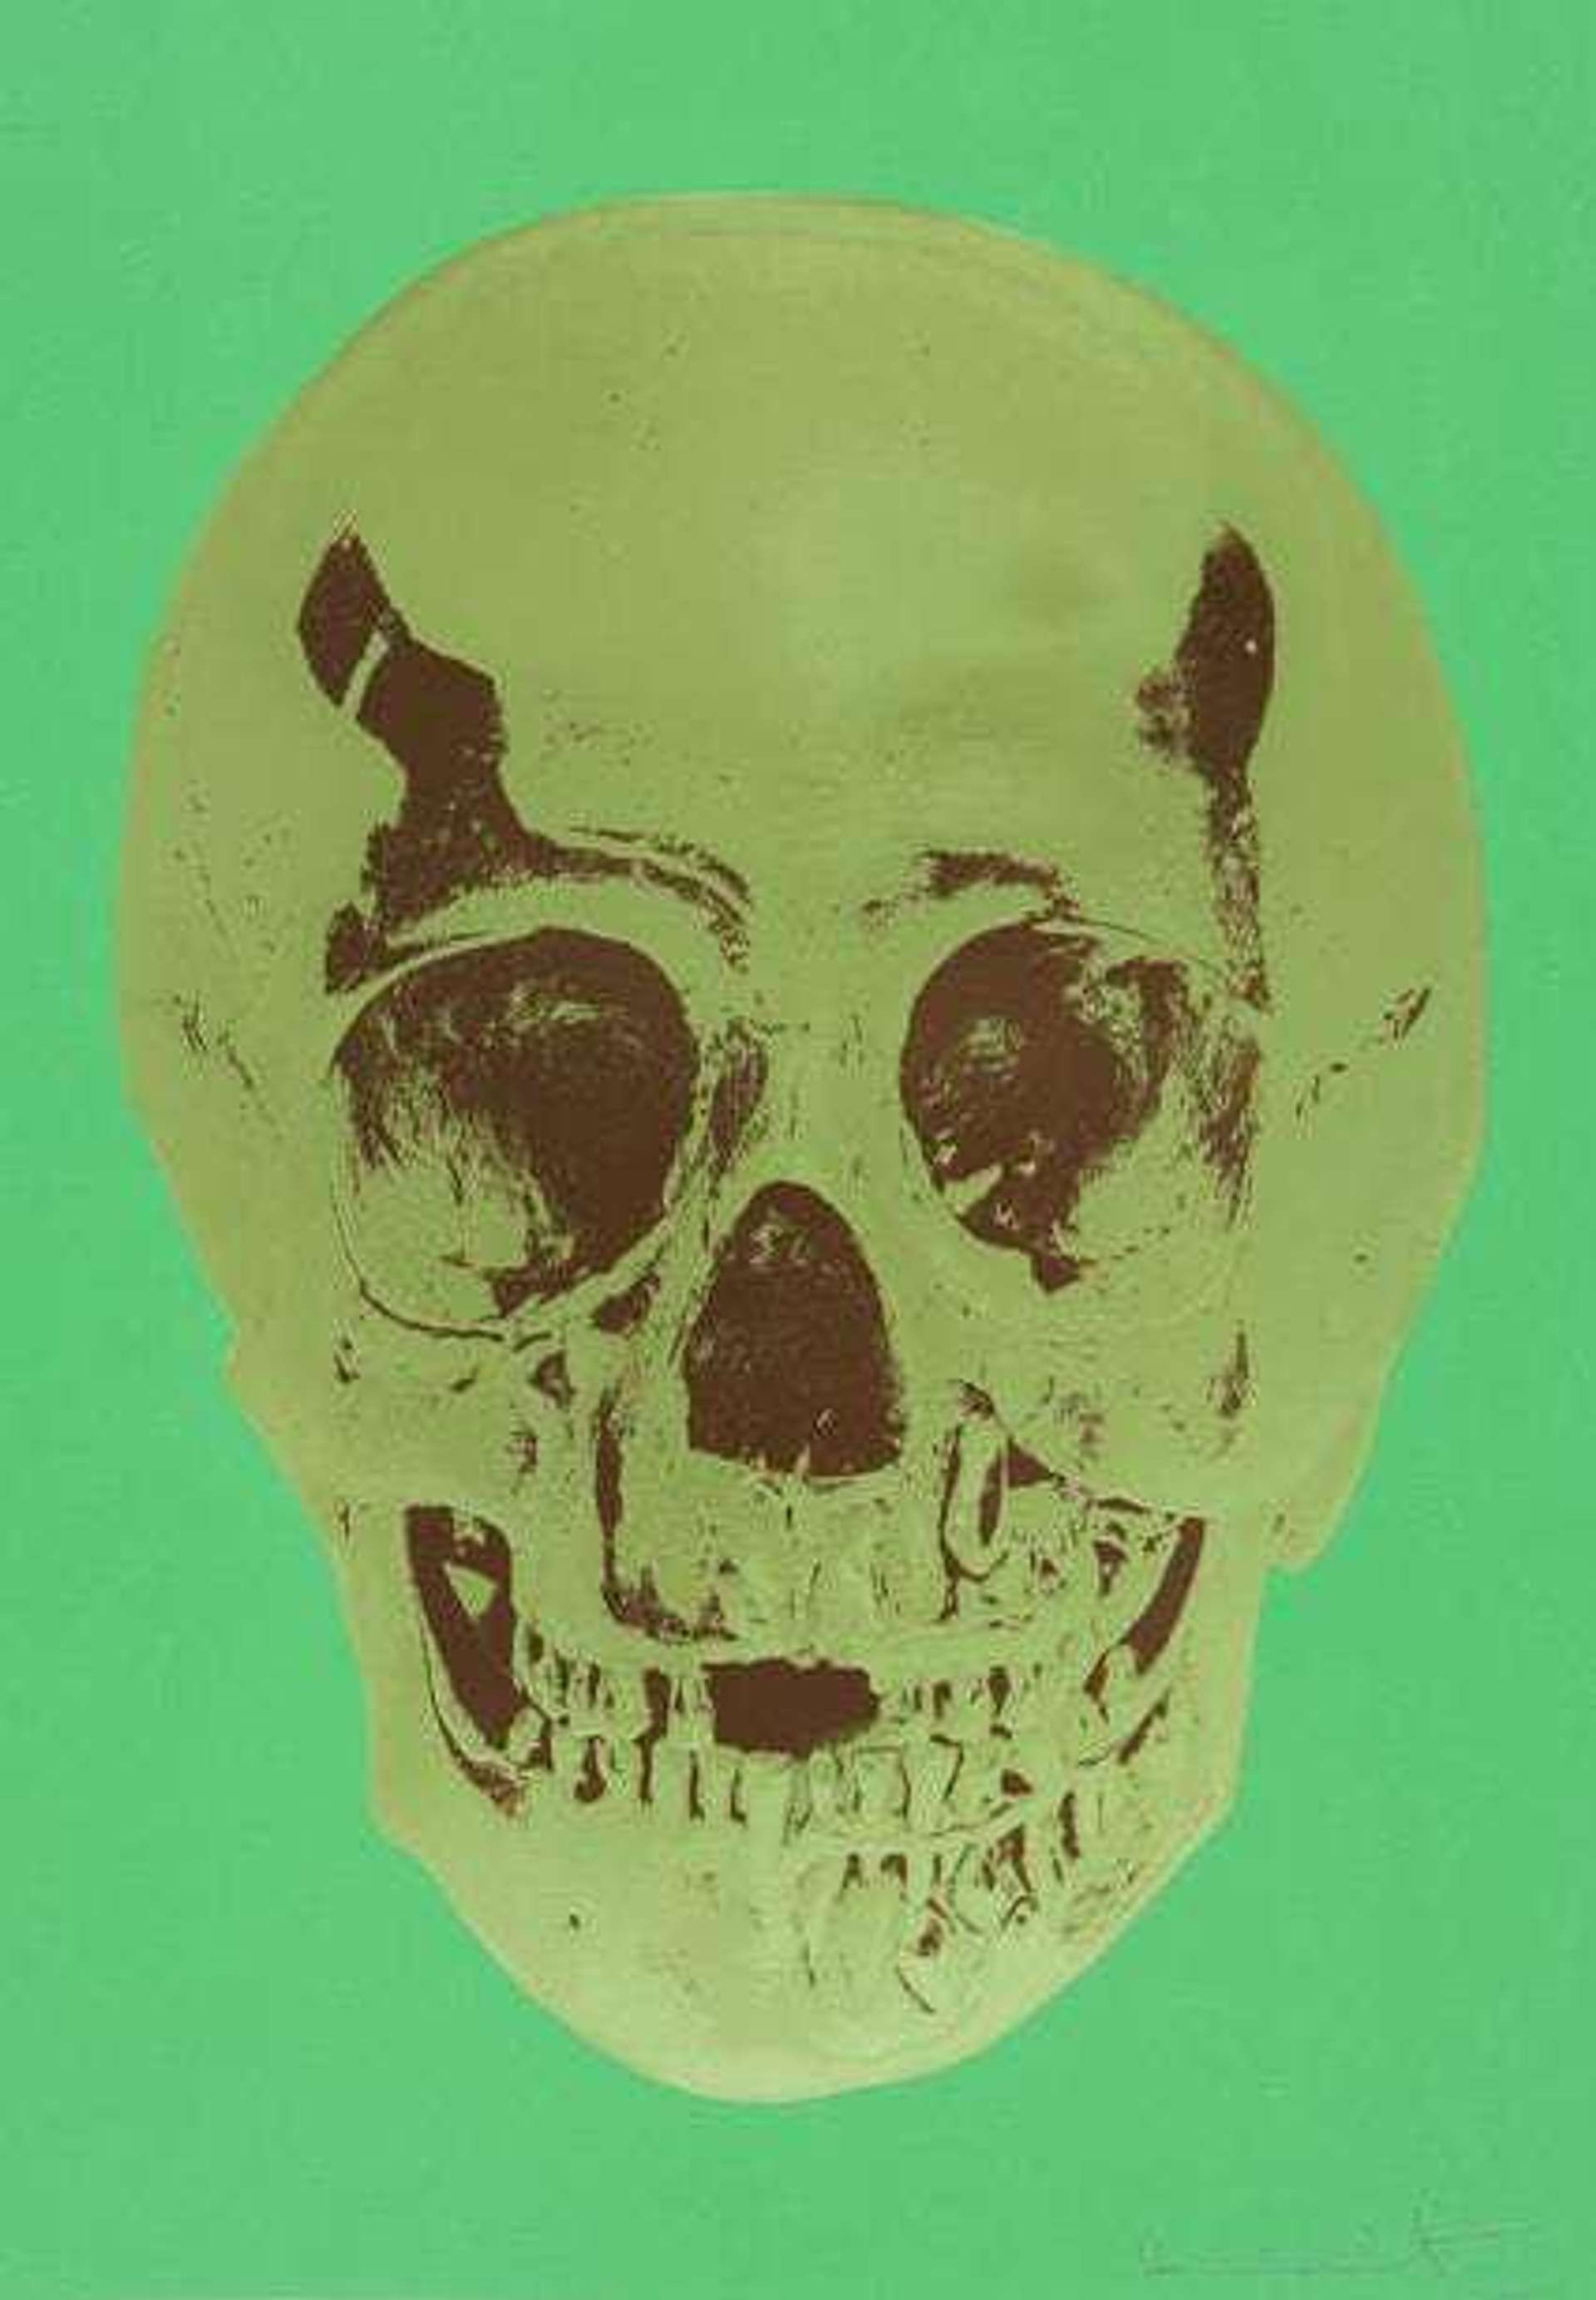 Damien Hirst: Till Death Do Us Part (viridian leaf, green, chocolate) - Signed Print